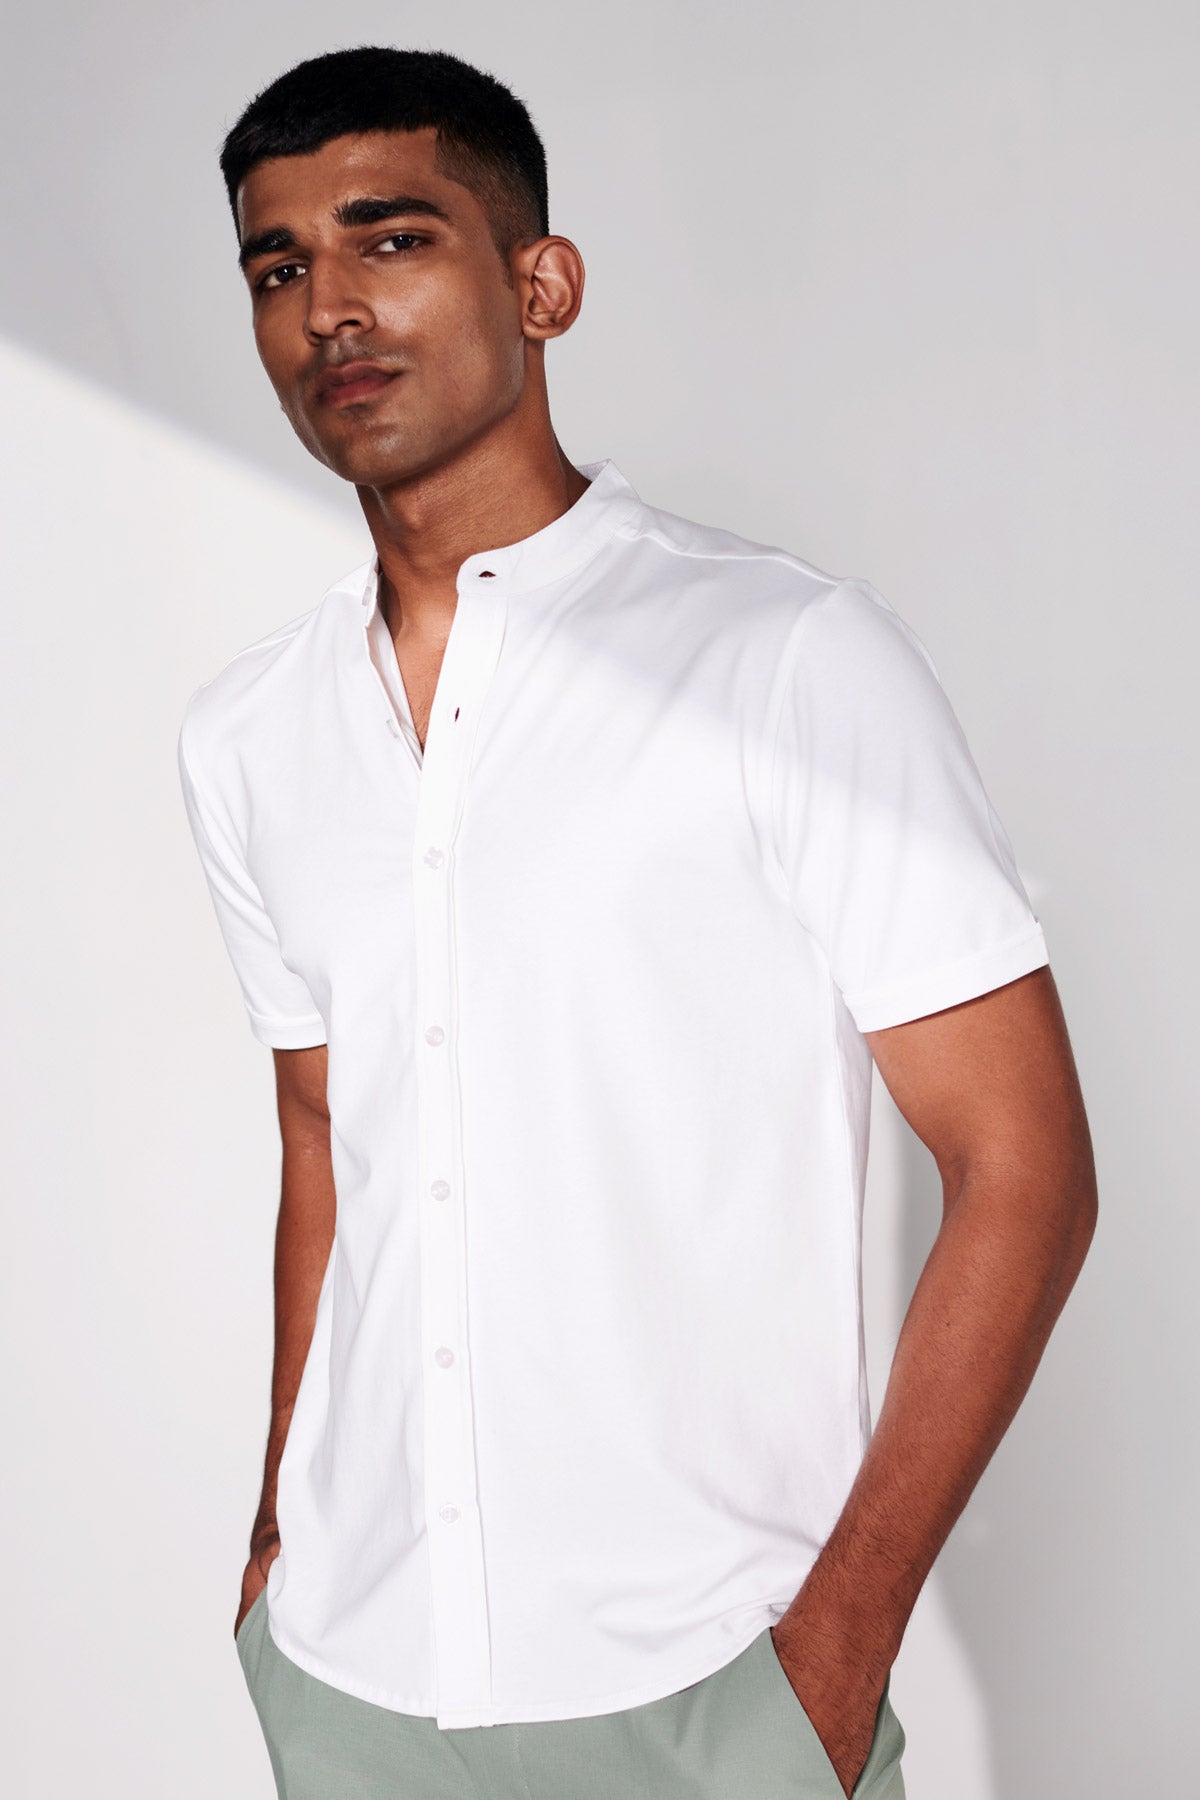 The Pure White Full Sleeve Shirt